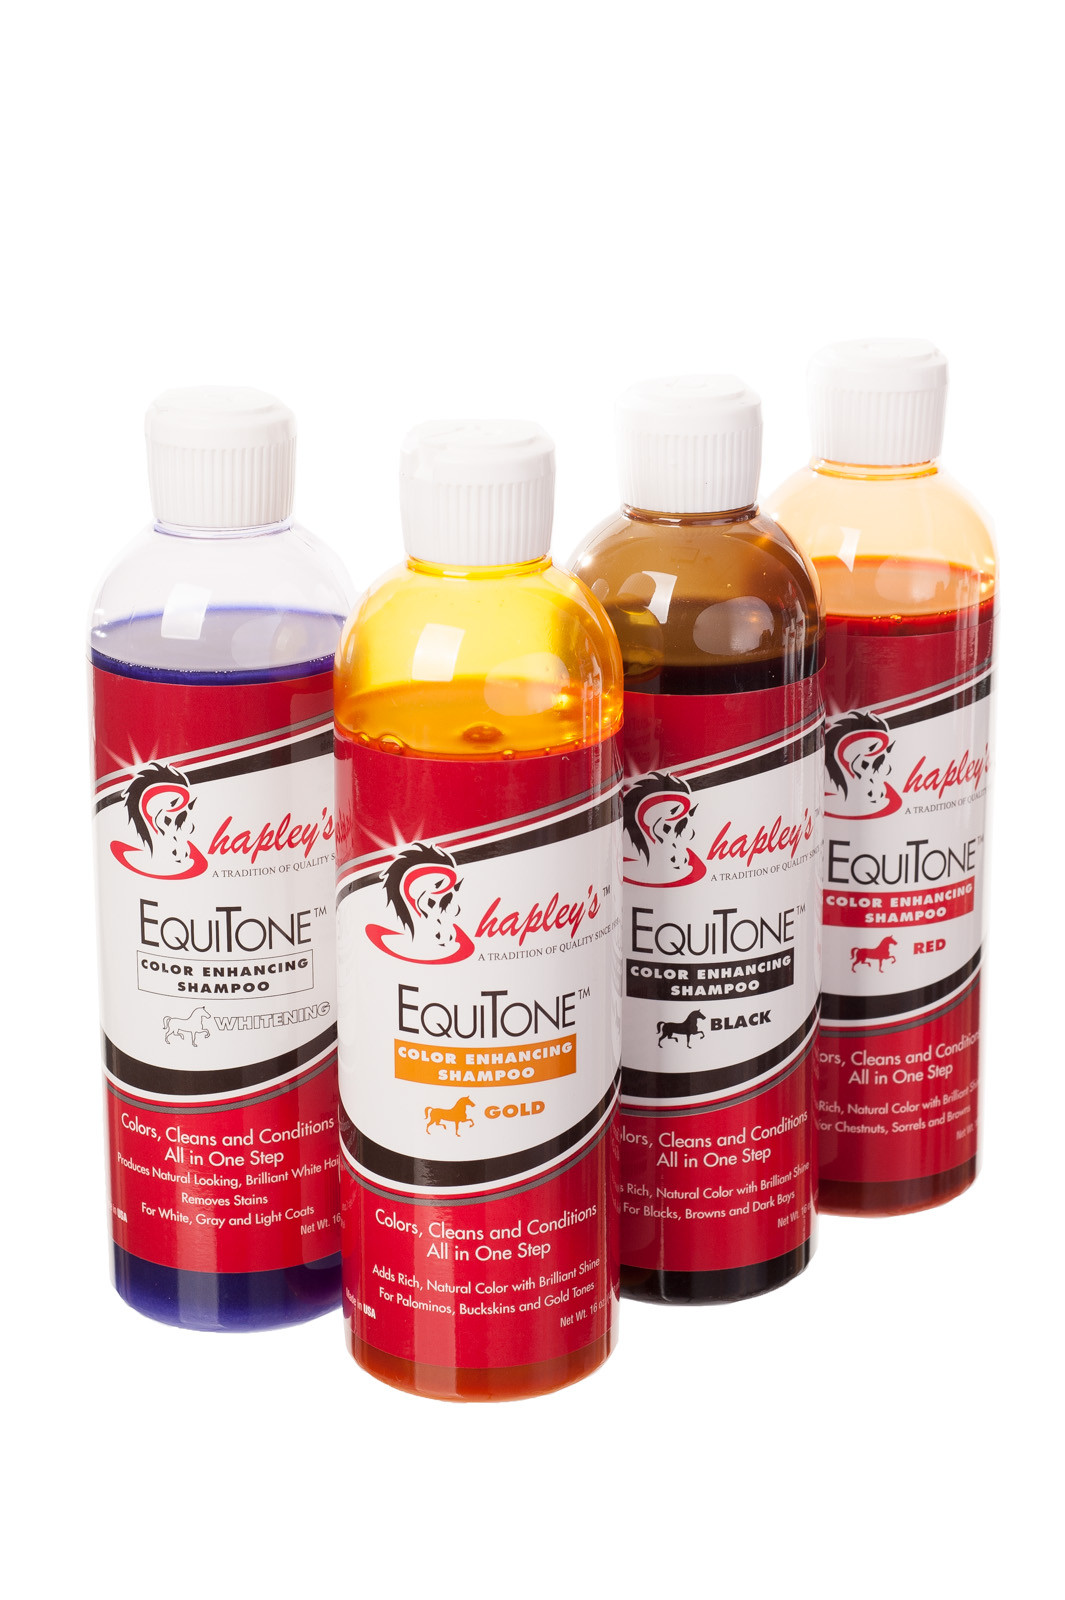 Shapley's Equitone Color Enhancing Shampoo